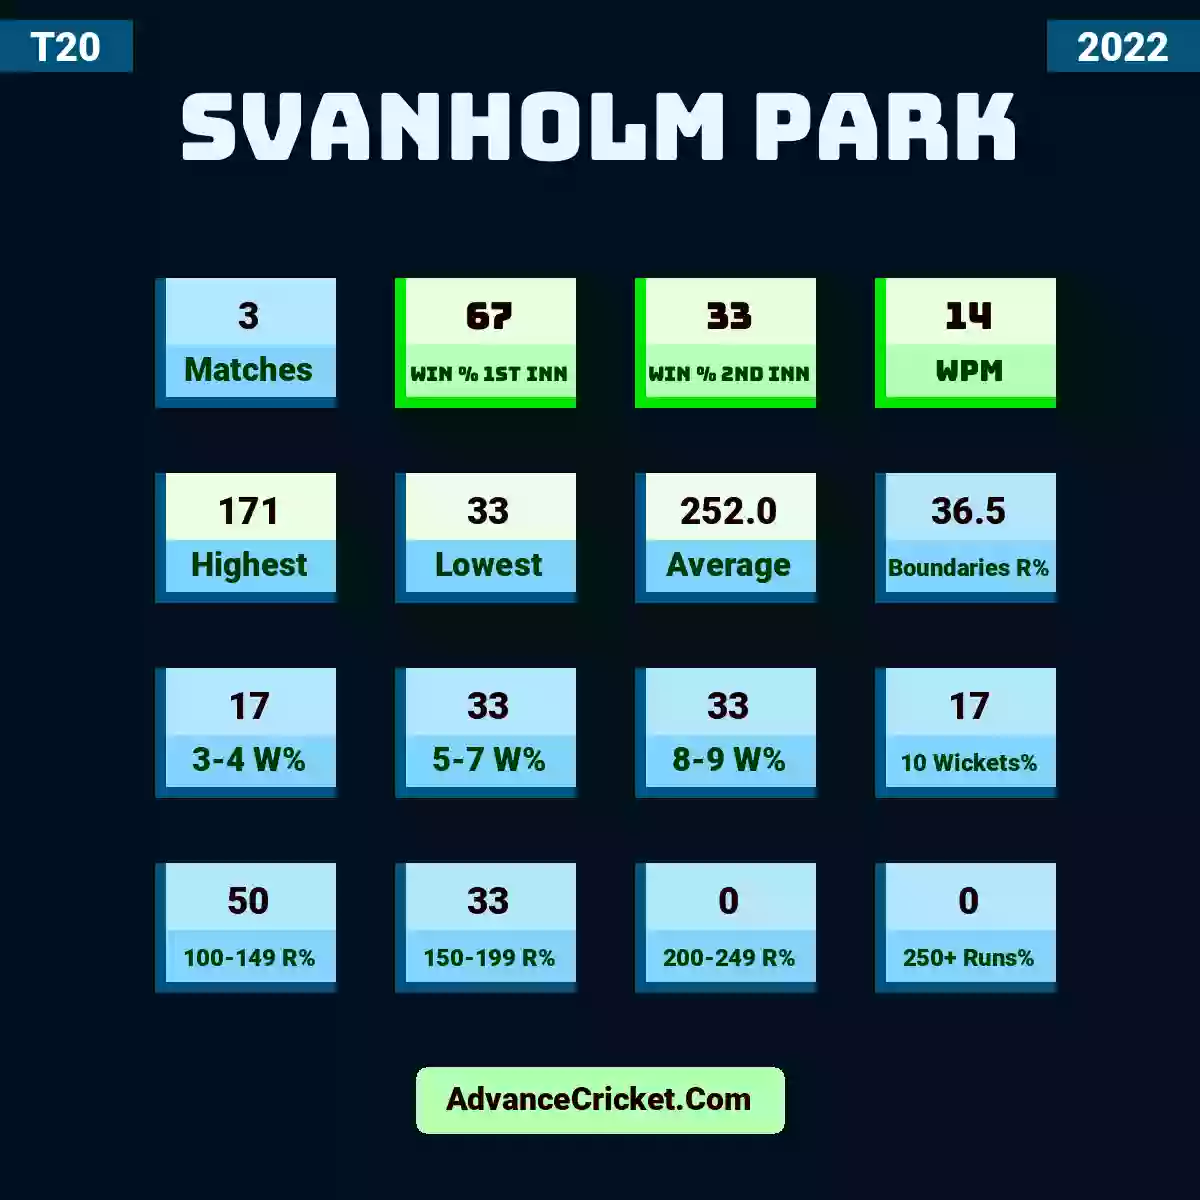 Image showing Svanholm Park with Matches: 3, Win % 1st Inn: 67, Win % 2nd Inn: 33, WPM: 14, Highest: 171, Lowest: 33, Average: 252.0, Boundaries R%: 36.5, 3-4 W%: 17, 5-7 W%: 33, 8-9 W%: 33, 10 Wickets%: 17, 100-149 R%: 50, 150-199 R%: 33, 200-249 R%: 0, 250+ Runs%: 0.